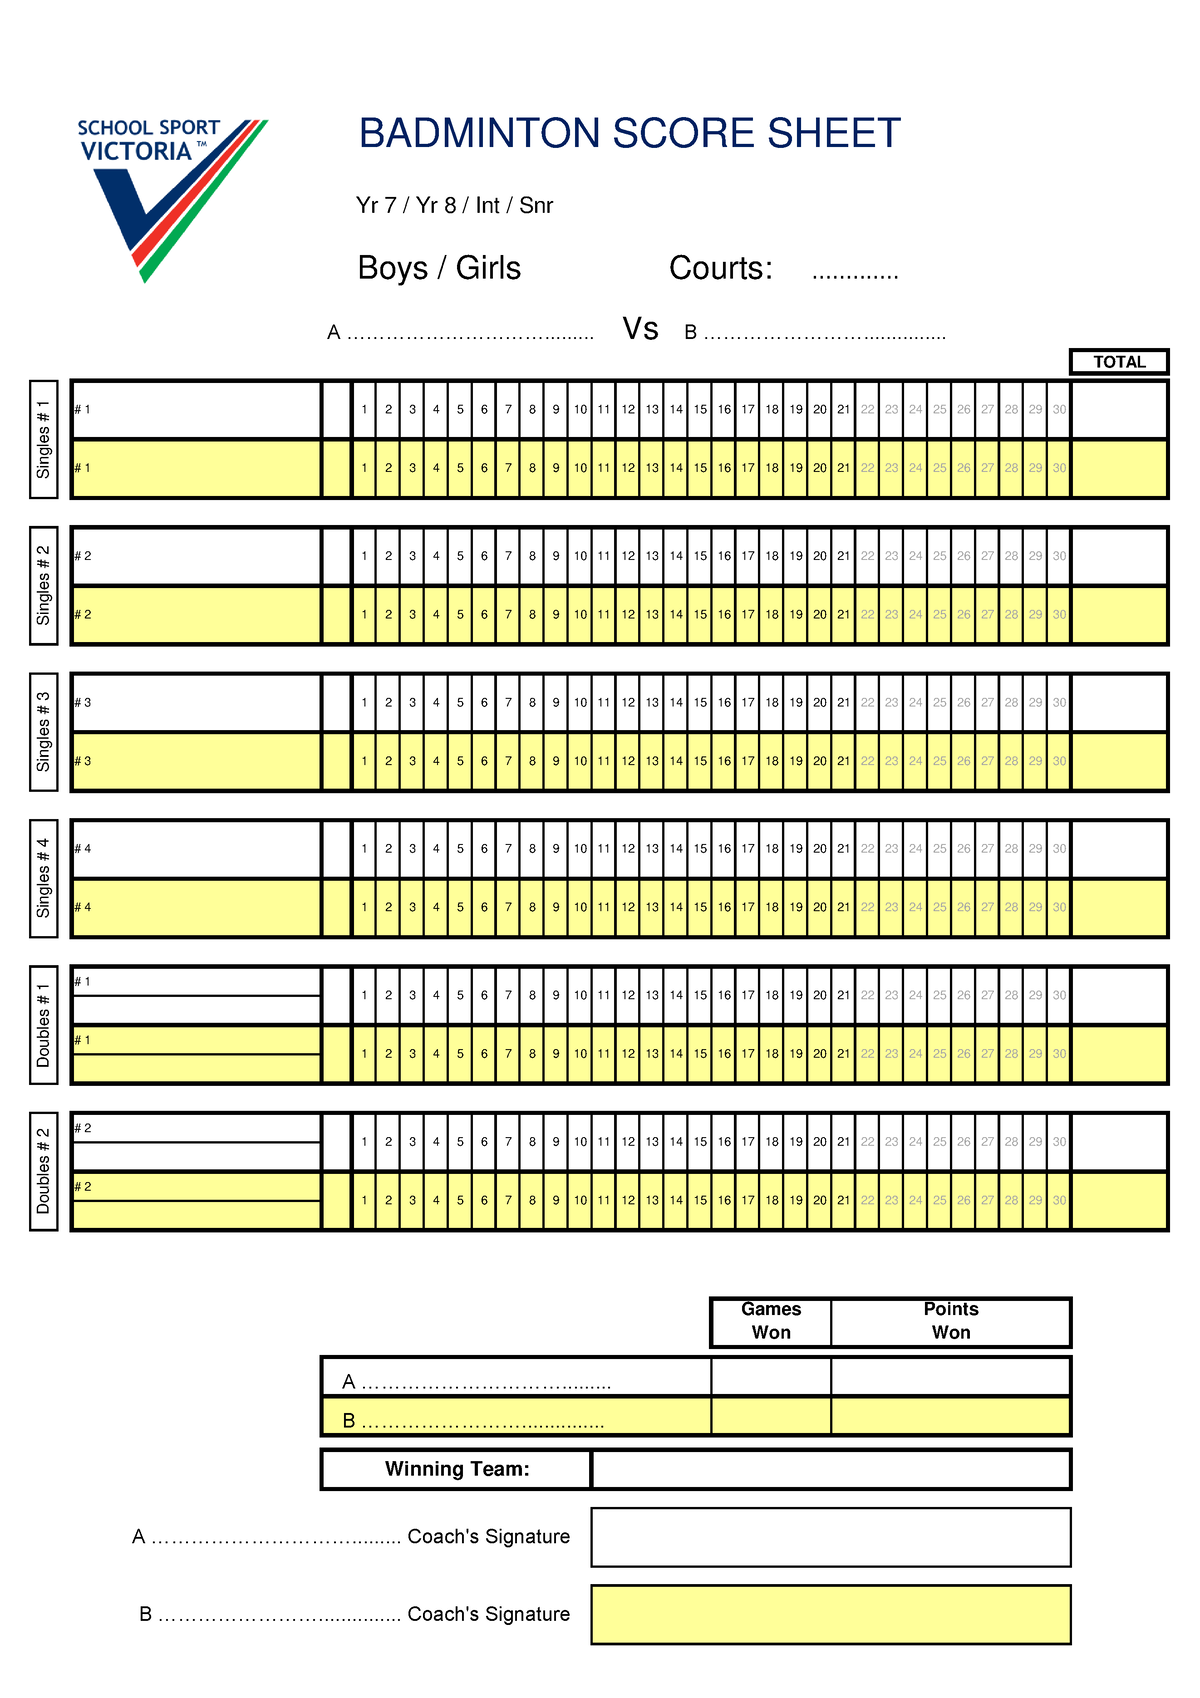 Badminton Score Sheet - rhgbdfhd - BADMINTON SCORE SHEET Courts A